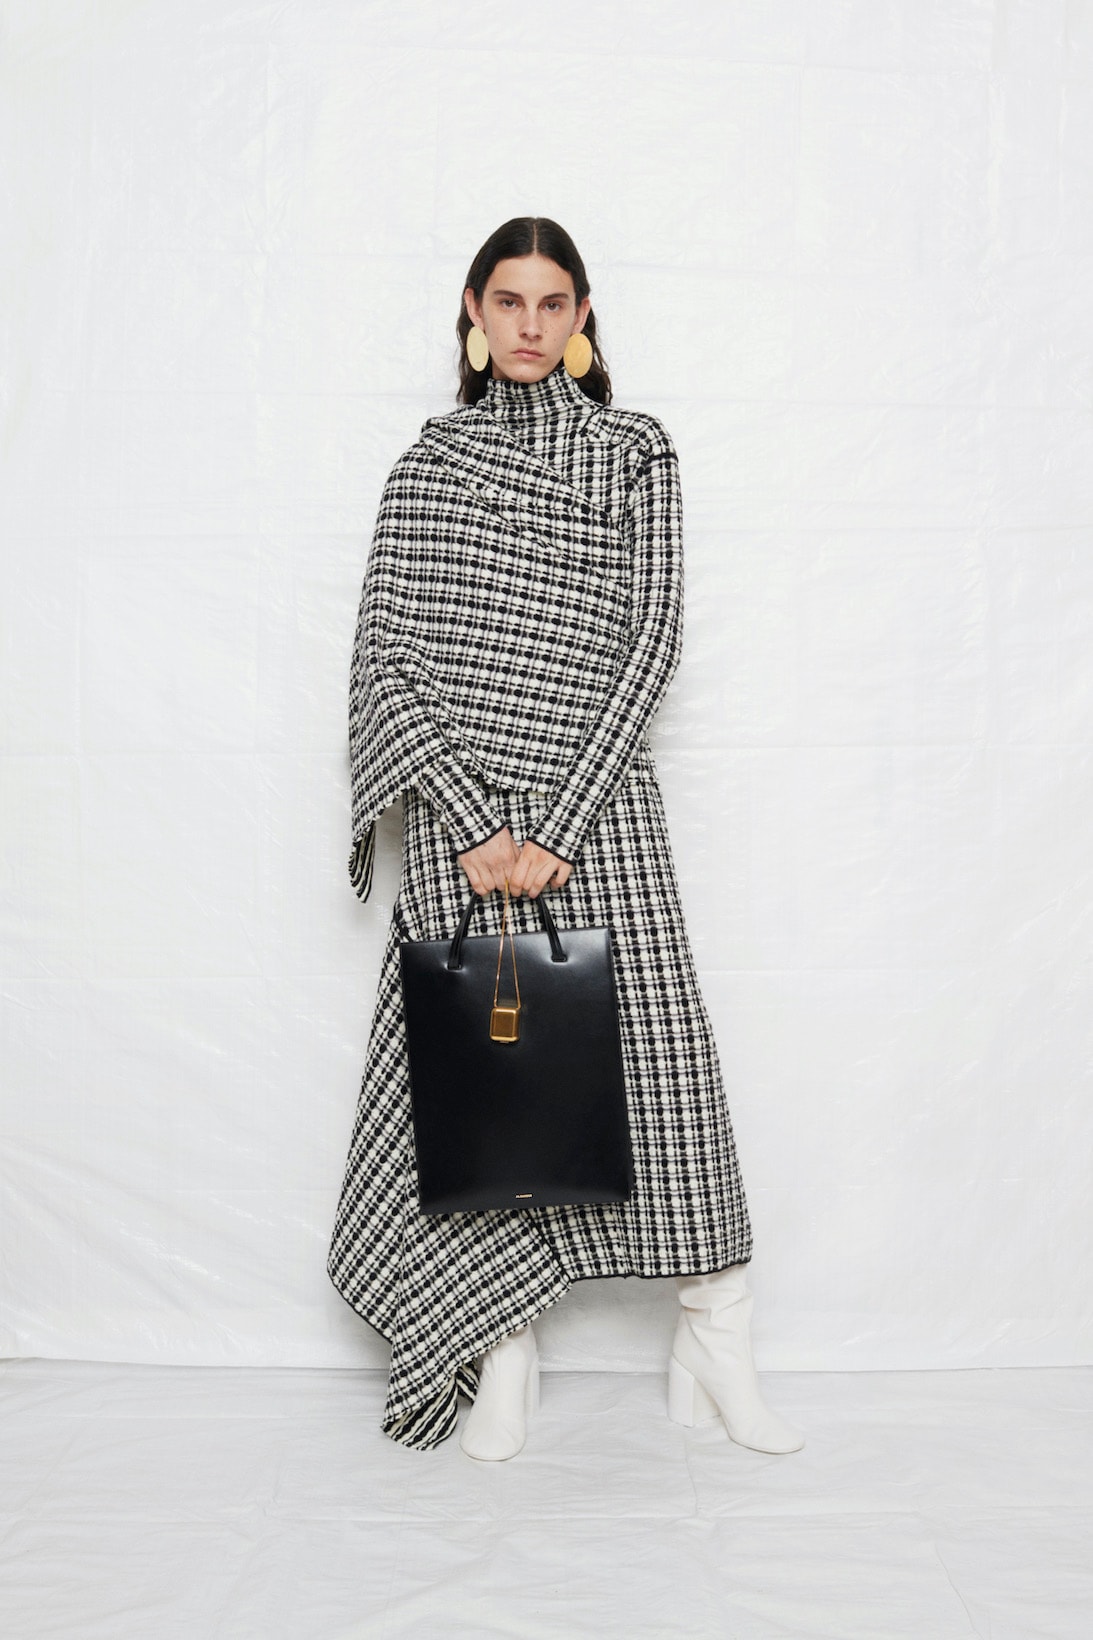 jil sander fall winter womens collection paris fashion week pfw dress handbag